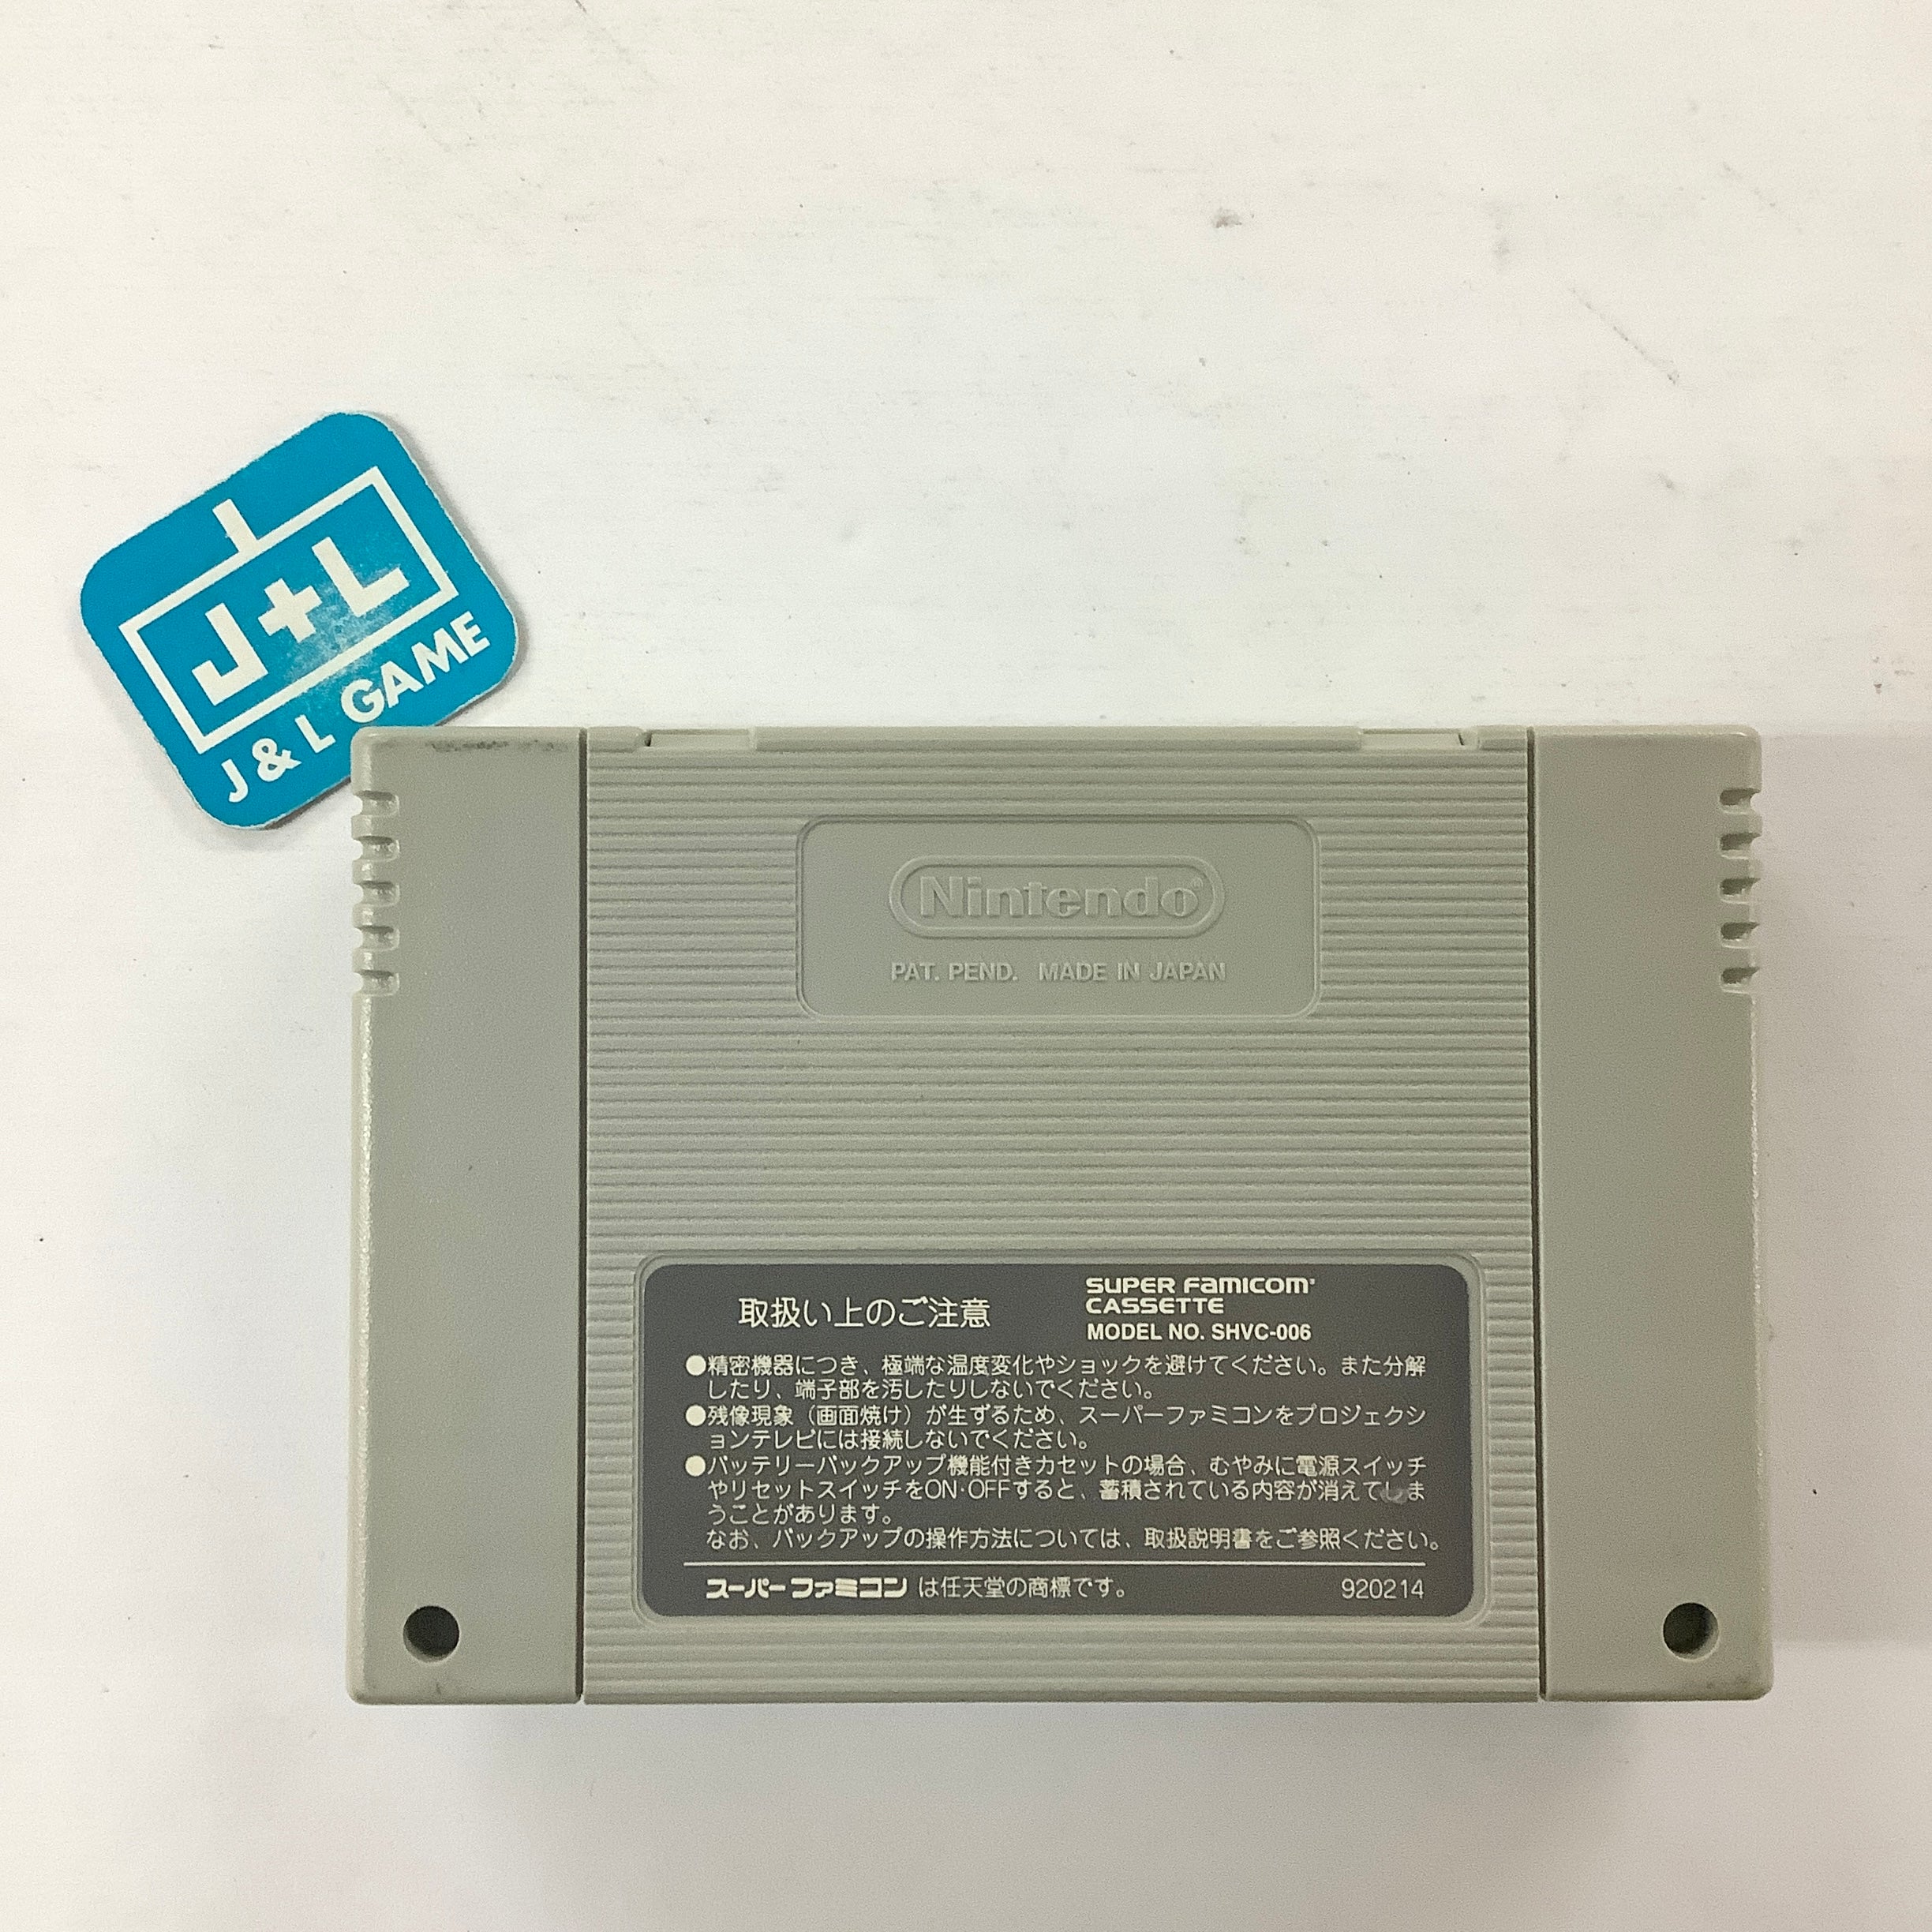 Shanghai III - (SFC) Super Famicom [Pre-Owned] (Japanese Import) Video Games SunSoft   